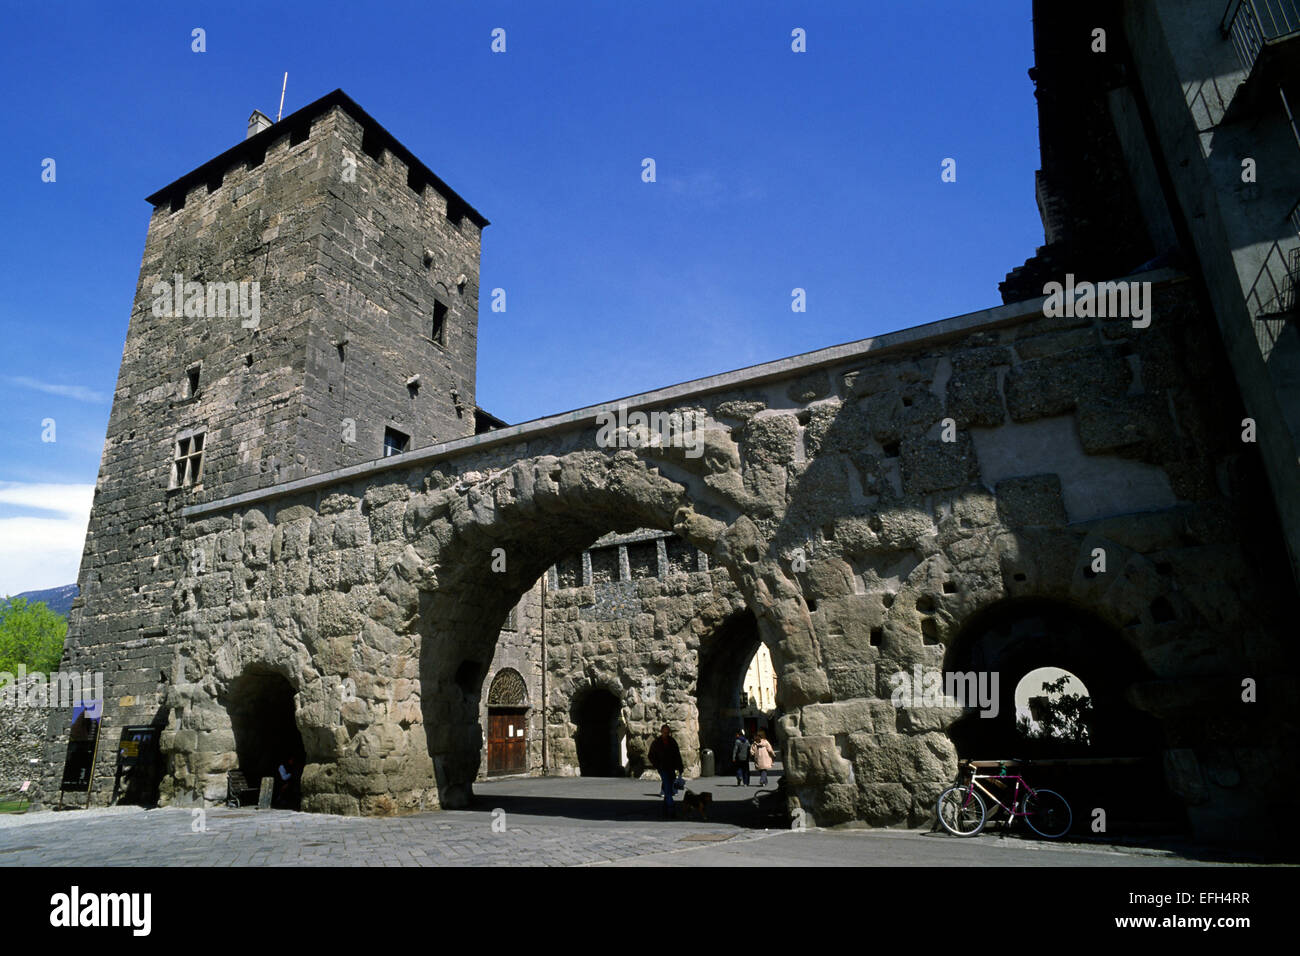 Italy, Valle d'Aosta, Aosta, porta pretoria roman gate Stock Photo